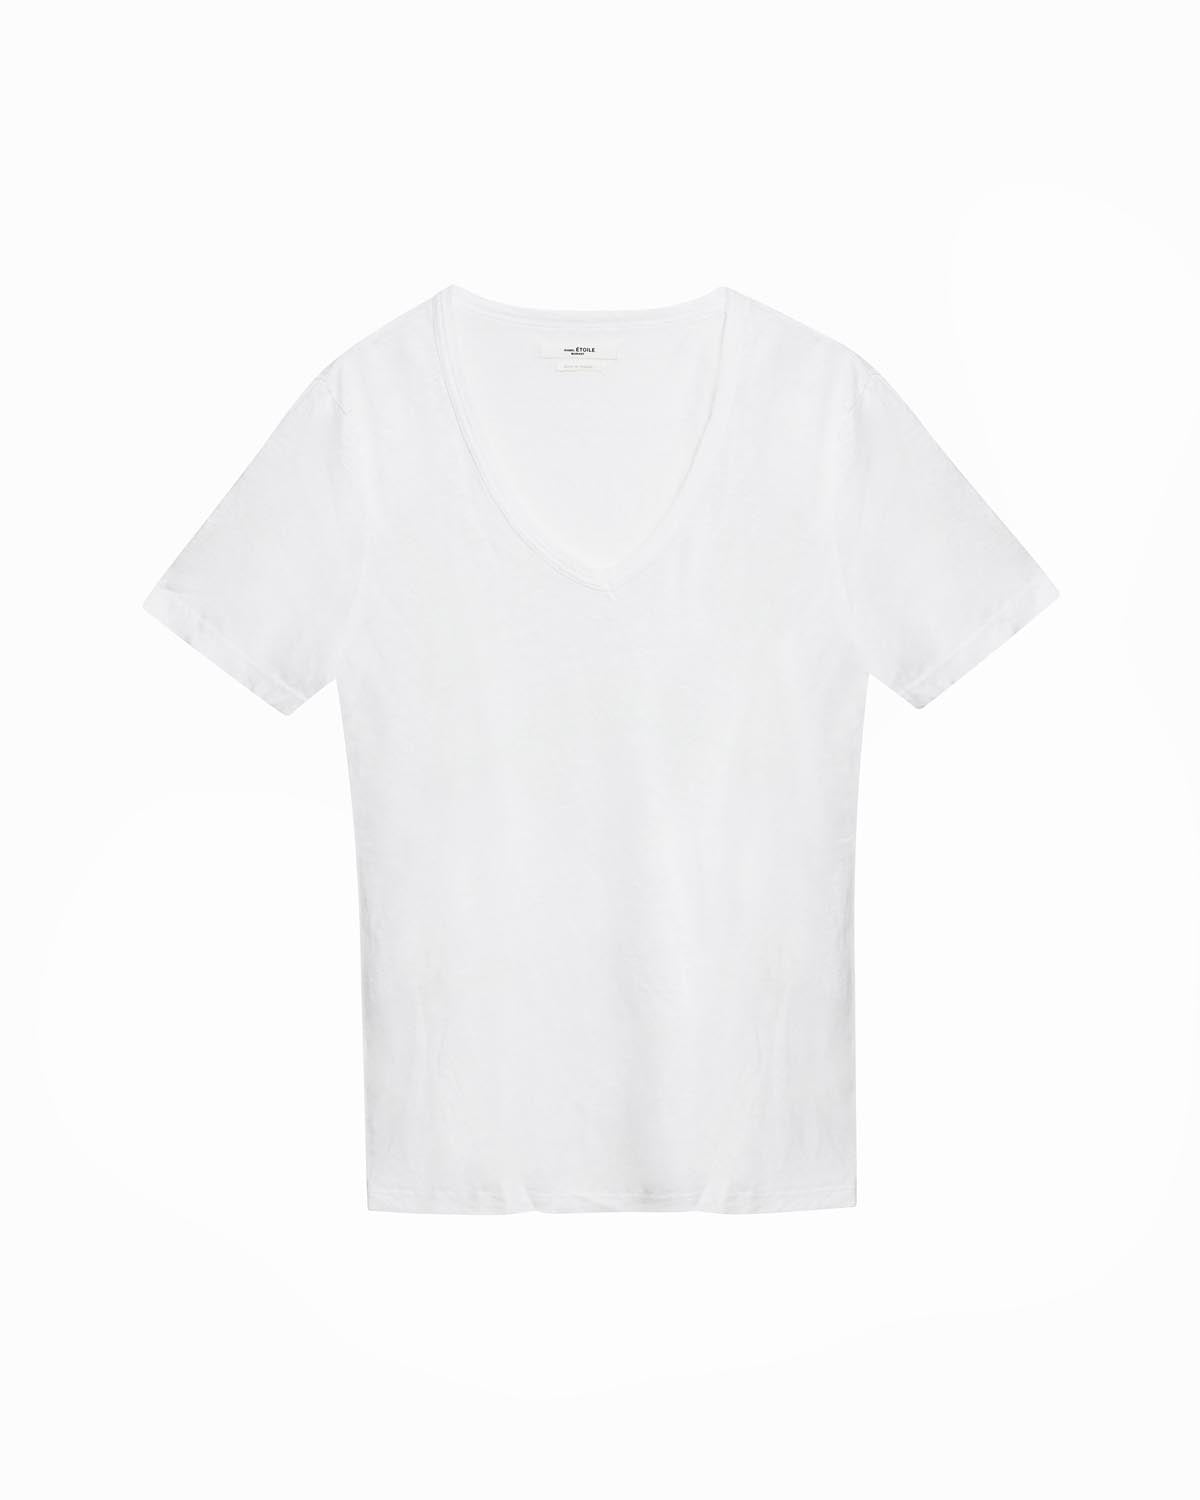 Kranger tee-shirt Woman White 1